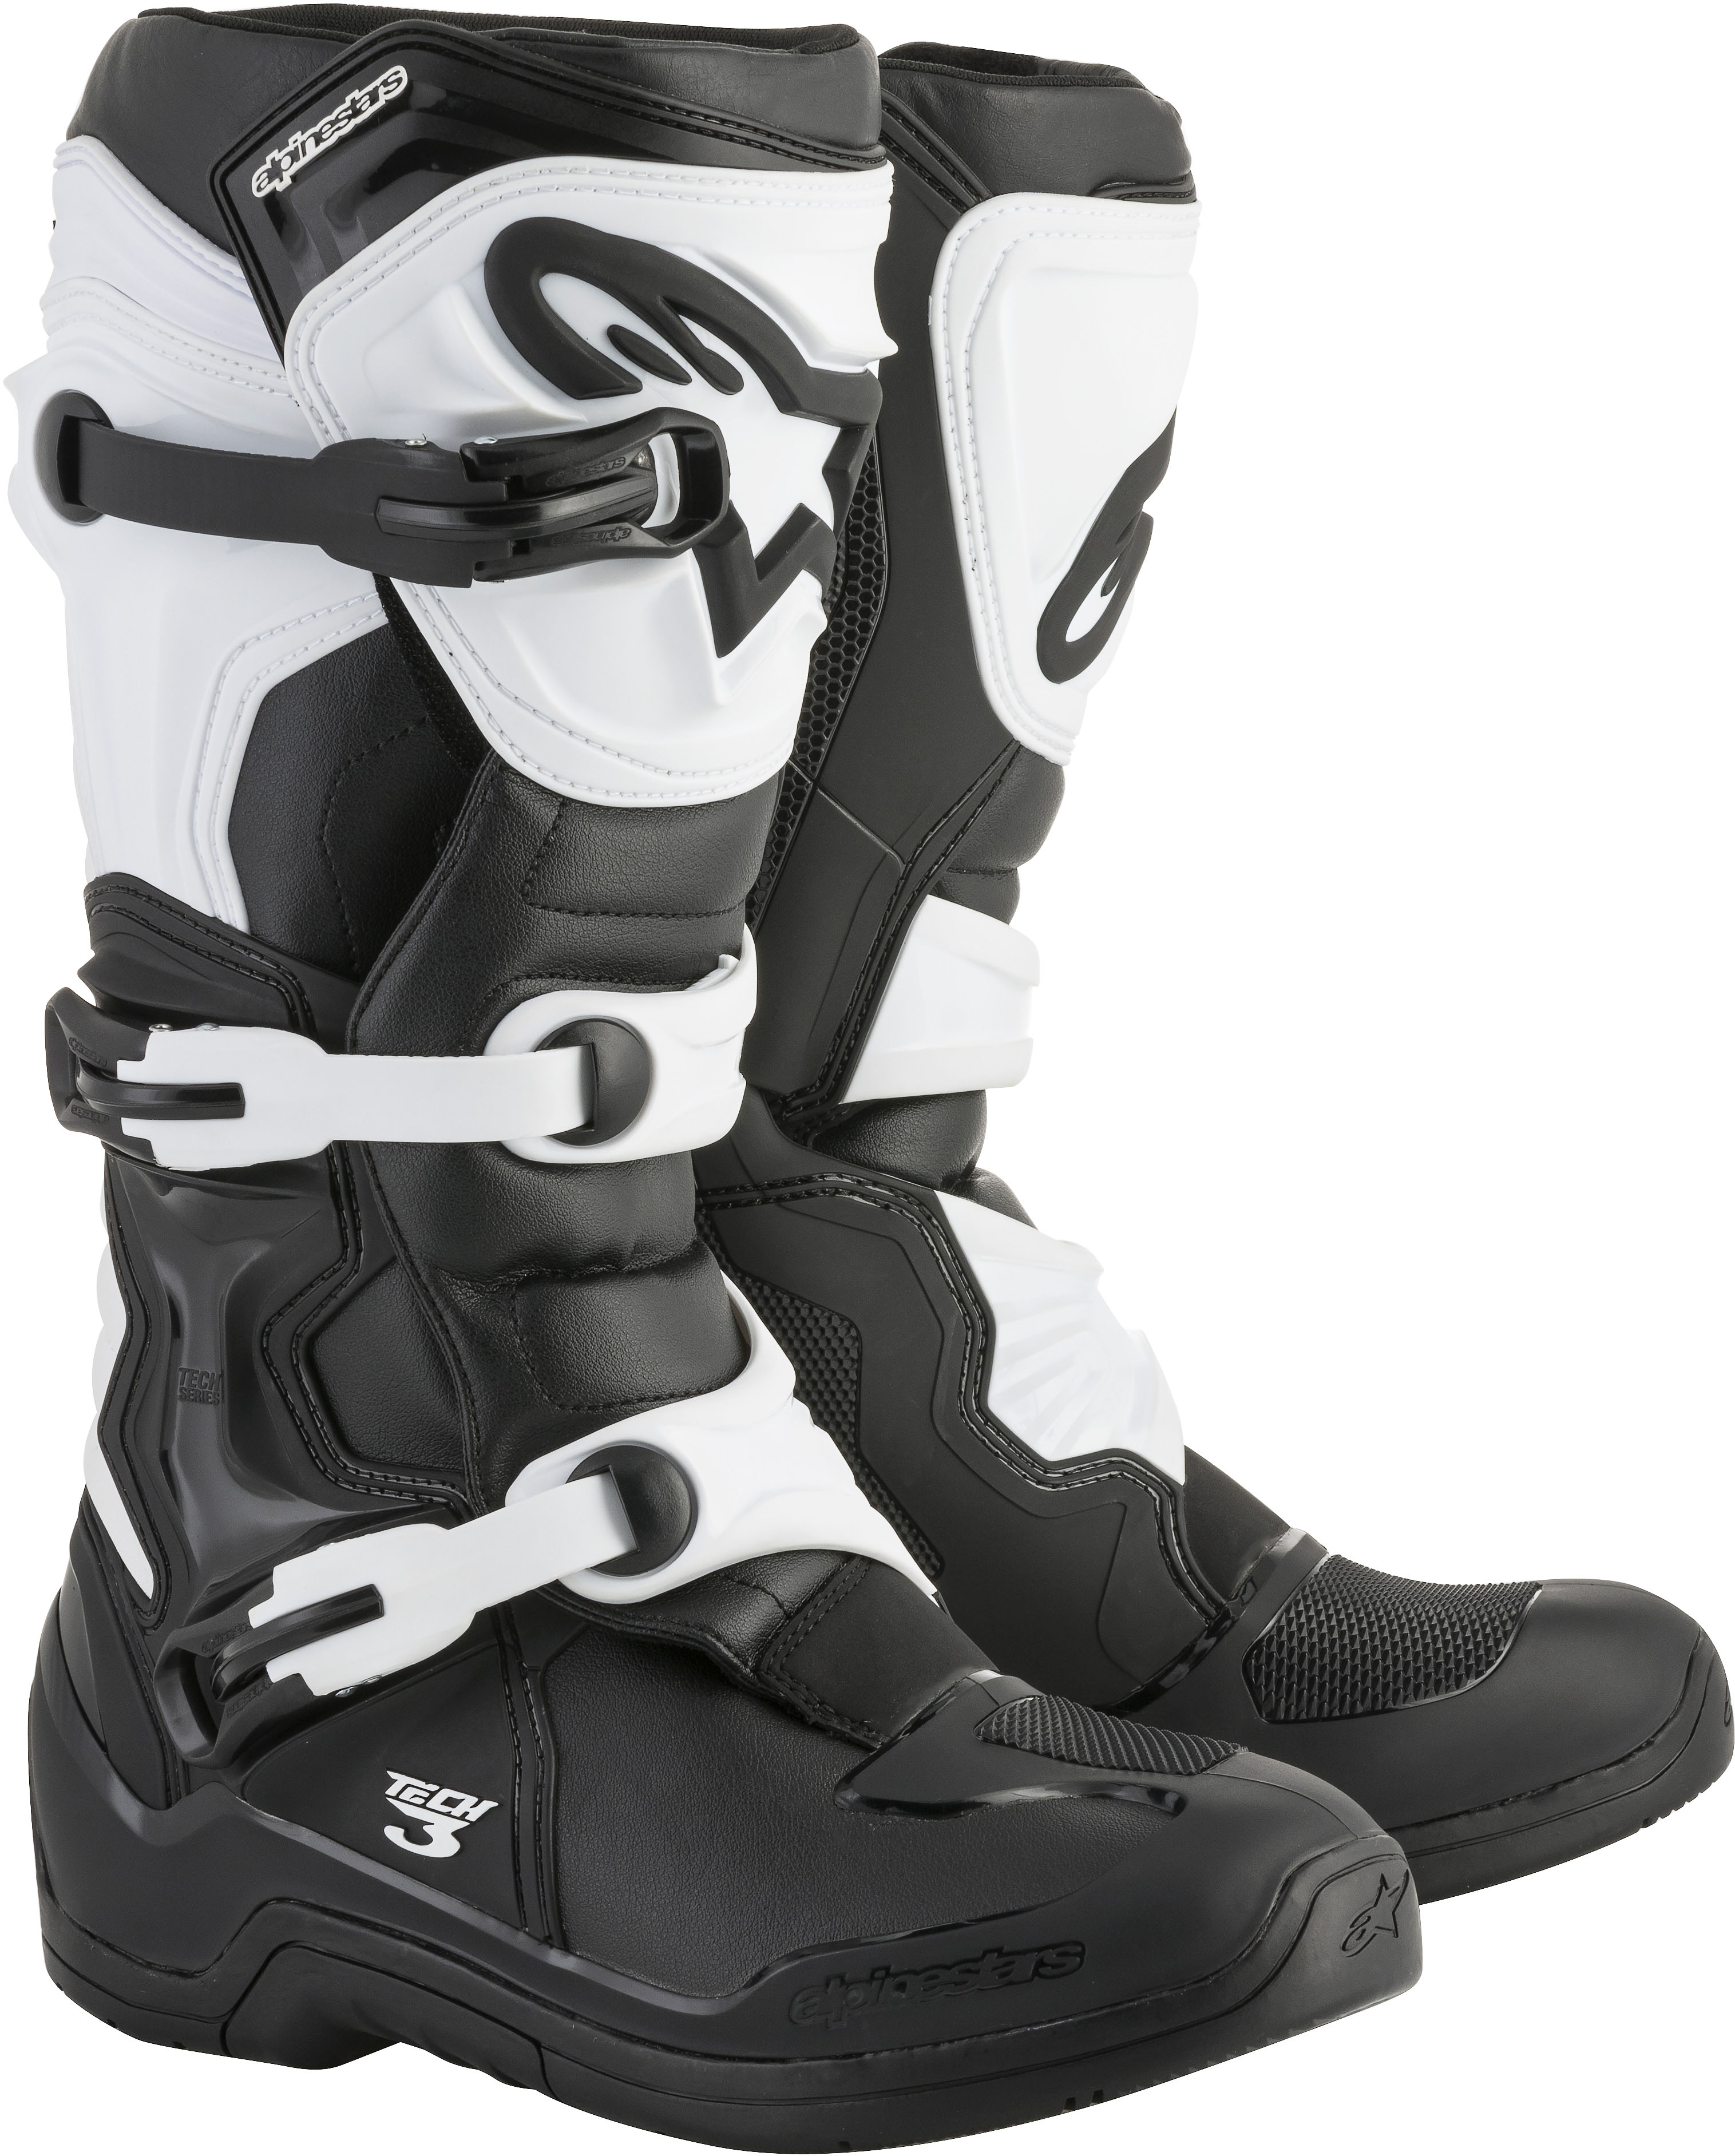 Tech 3 Boots Black/White Size 16 - Click Image to Close